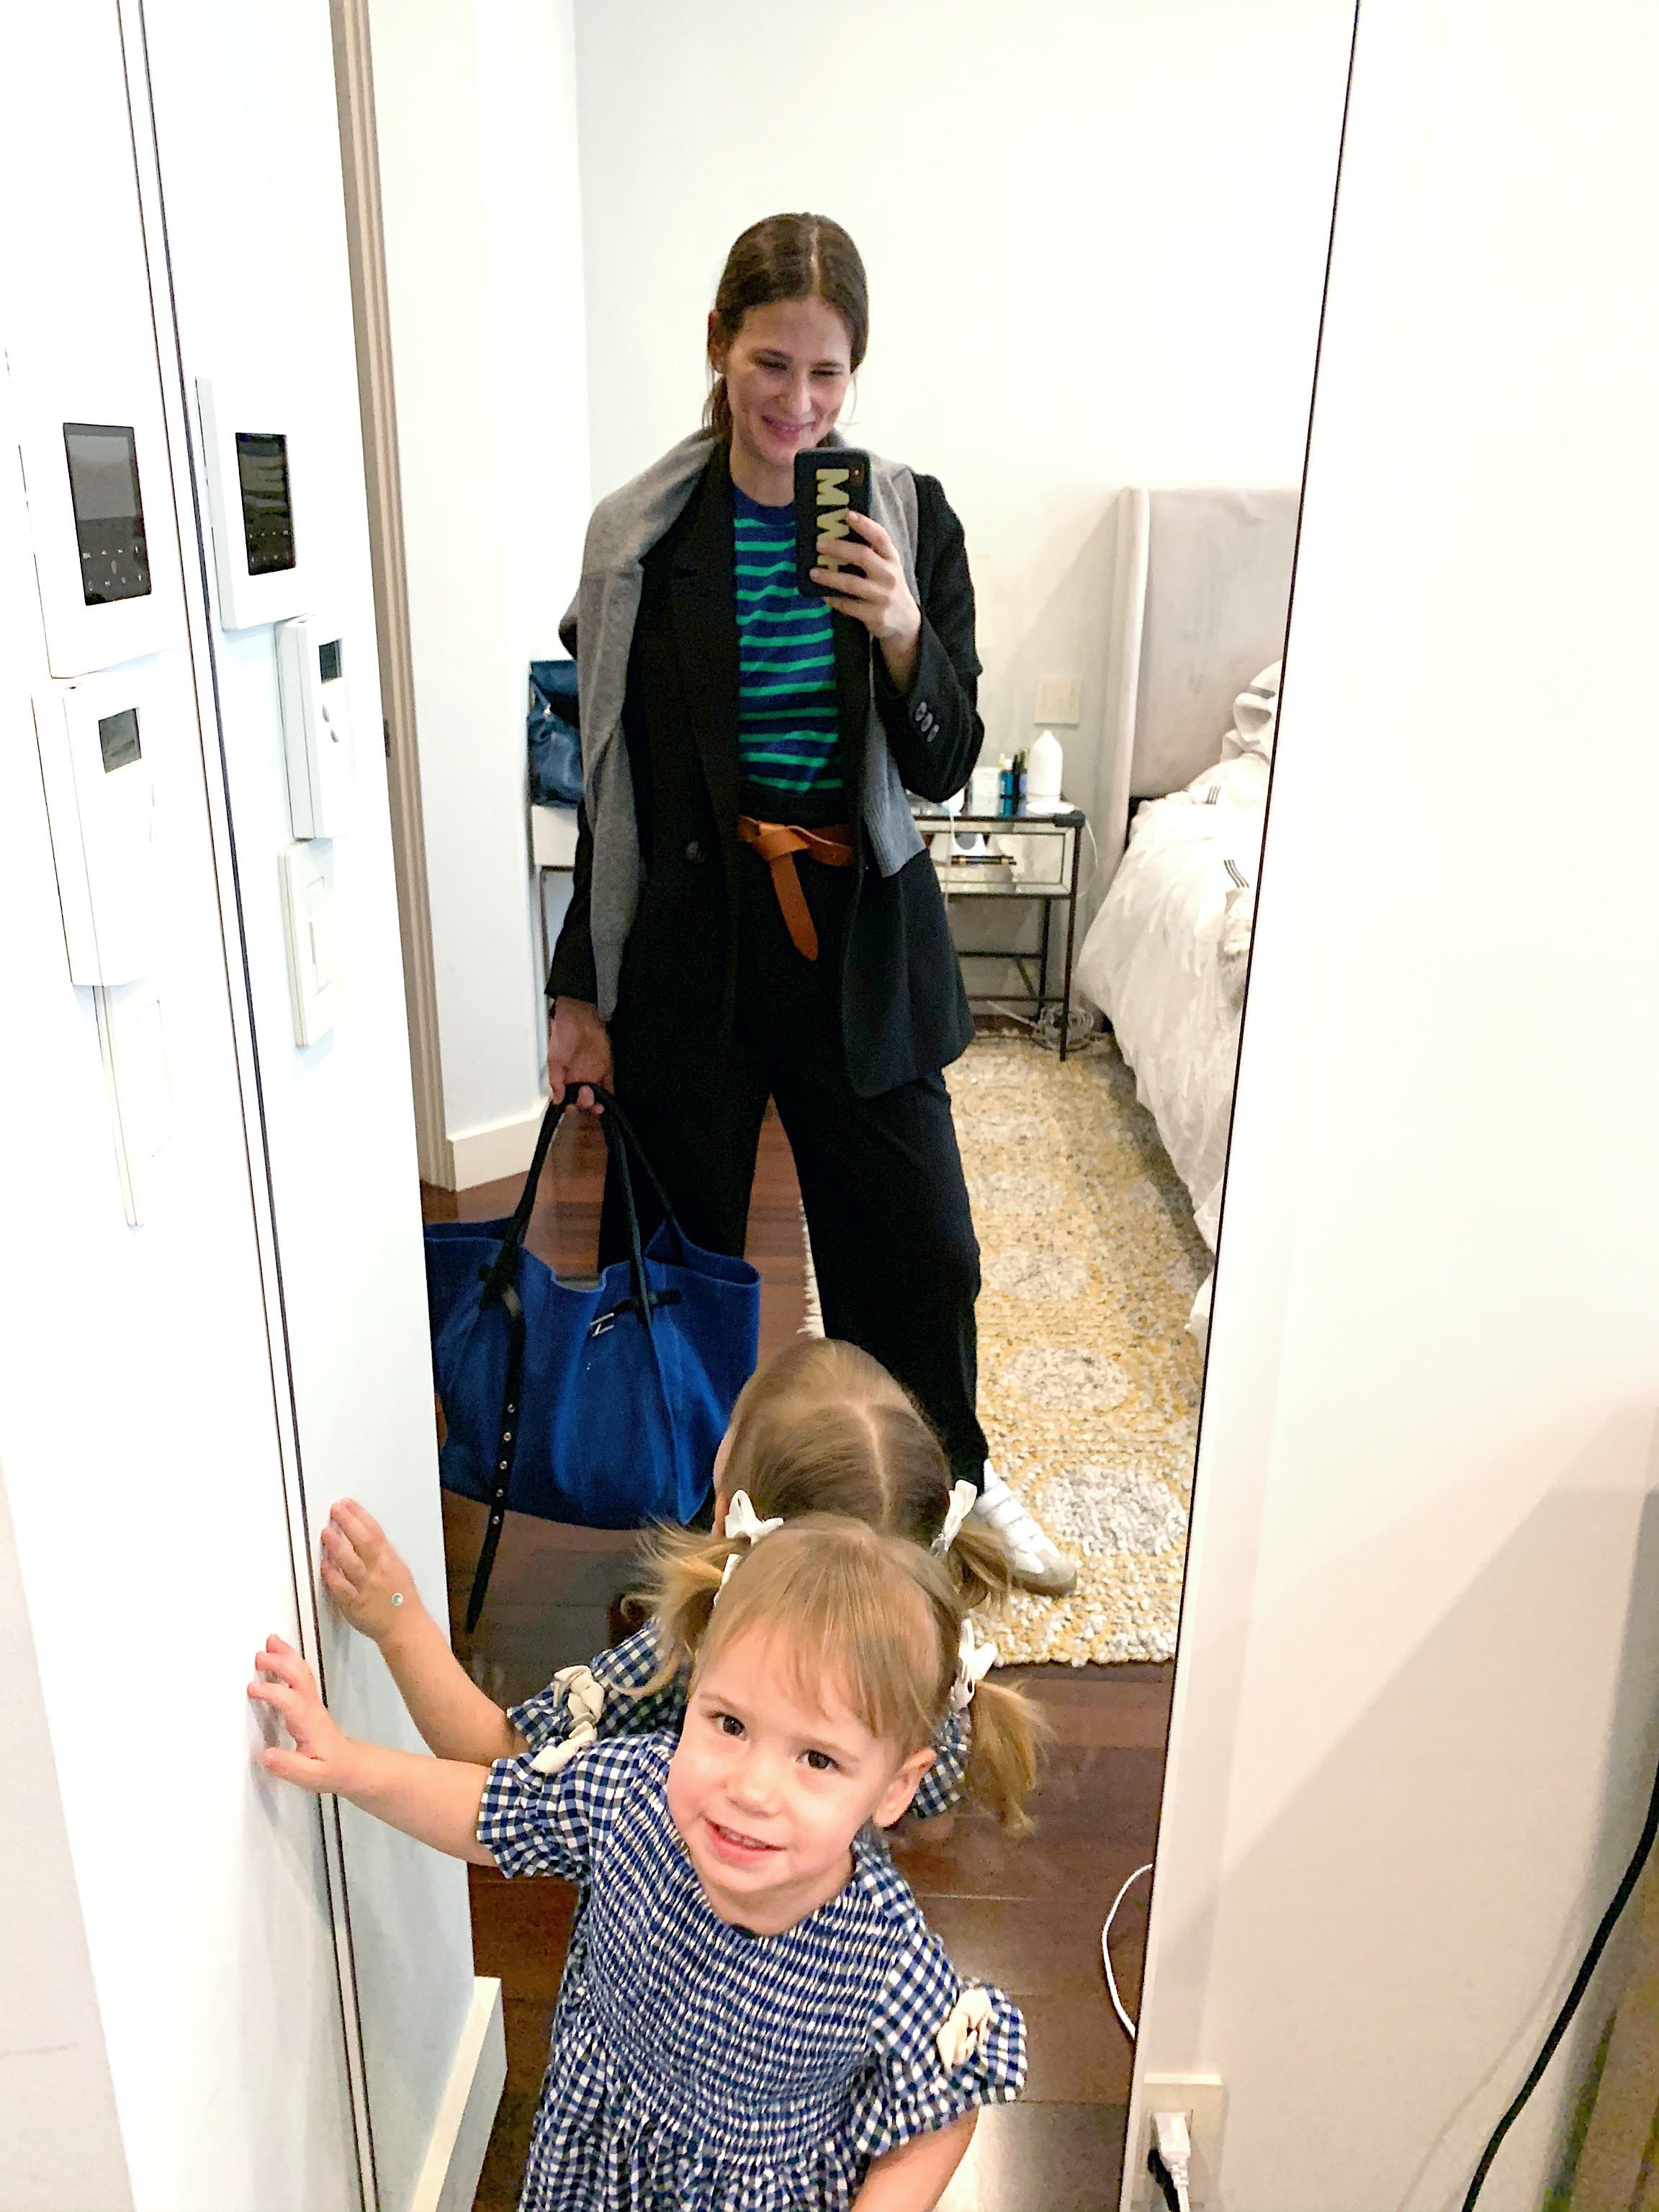 Working Mom on Getting Dressed During Coronavirus Crisis